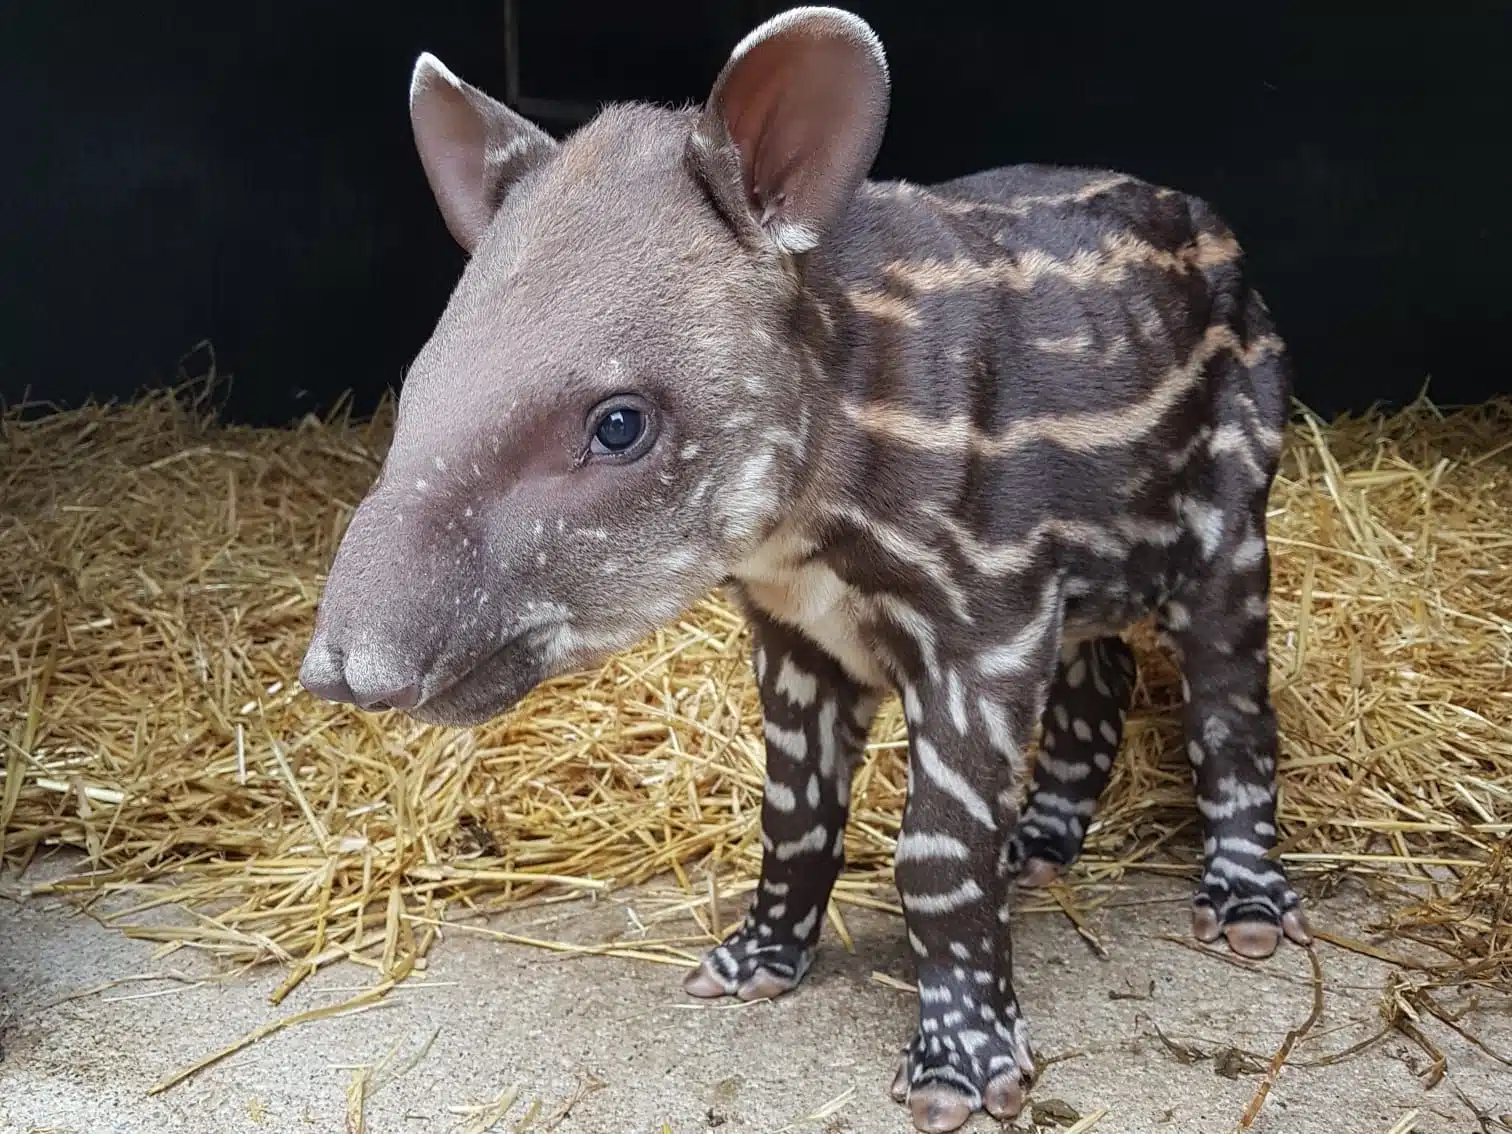 An adorable baby Tapir has been born - Newquay Zoo